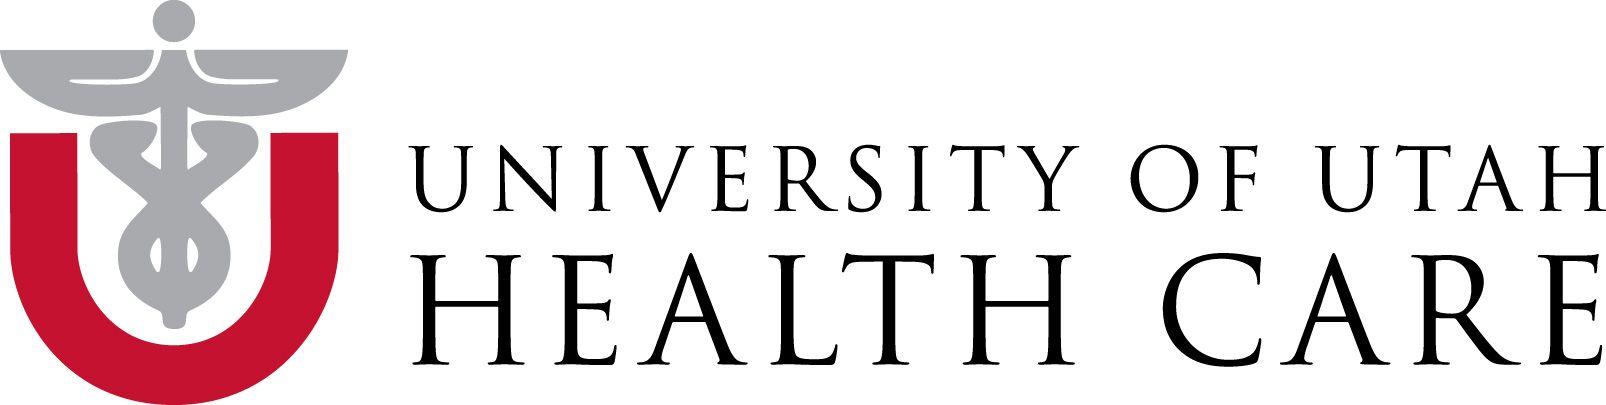 U of U Hospital Logo - School of Medicine Alumni Relations